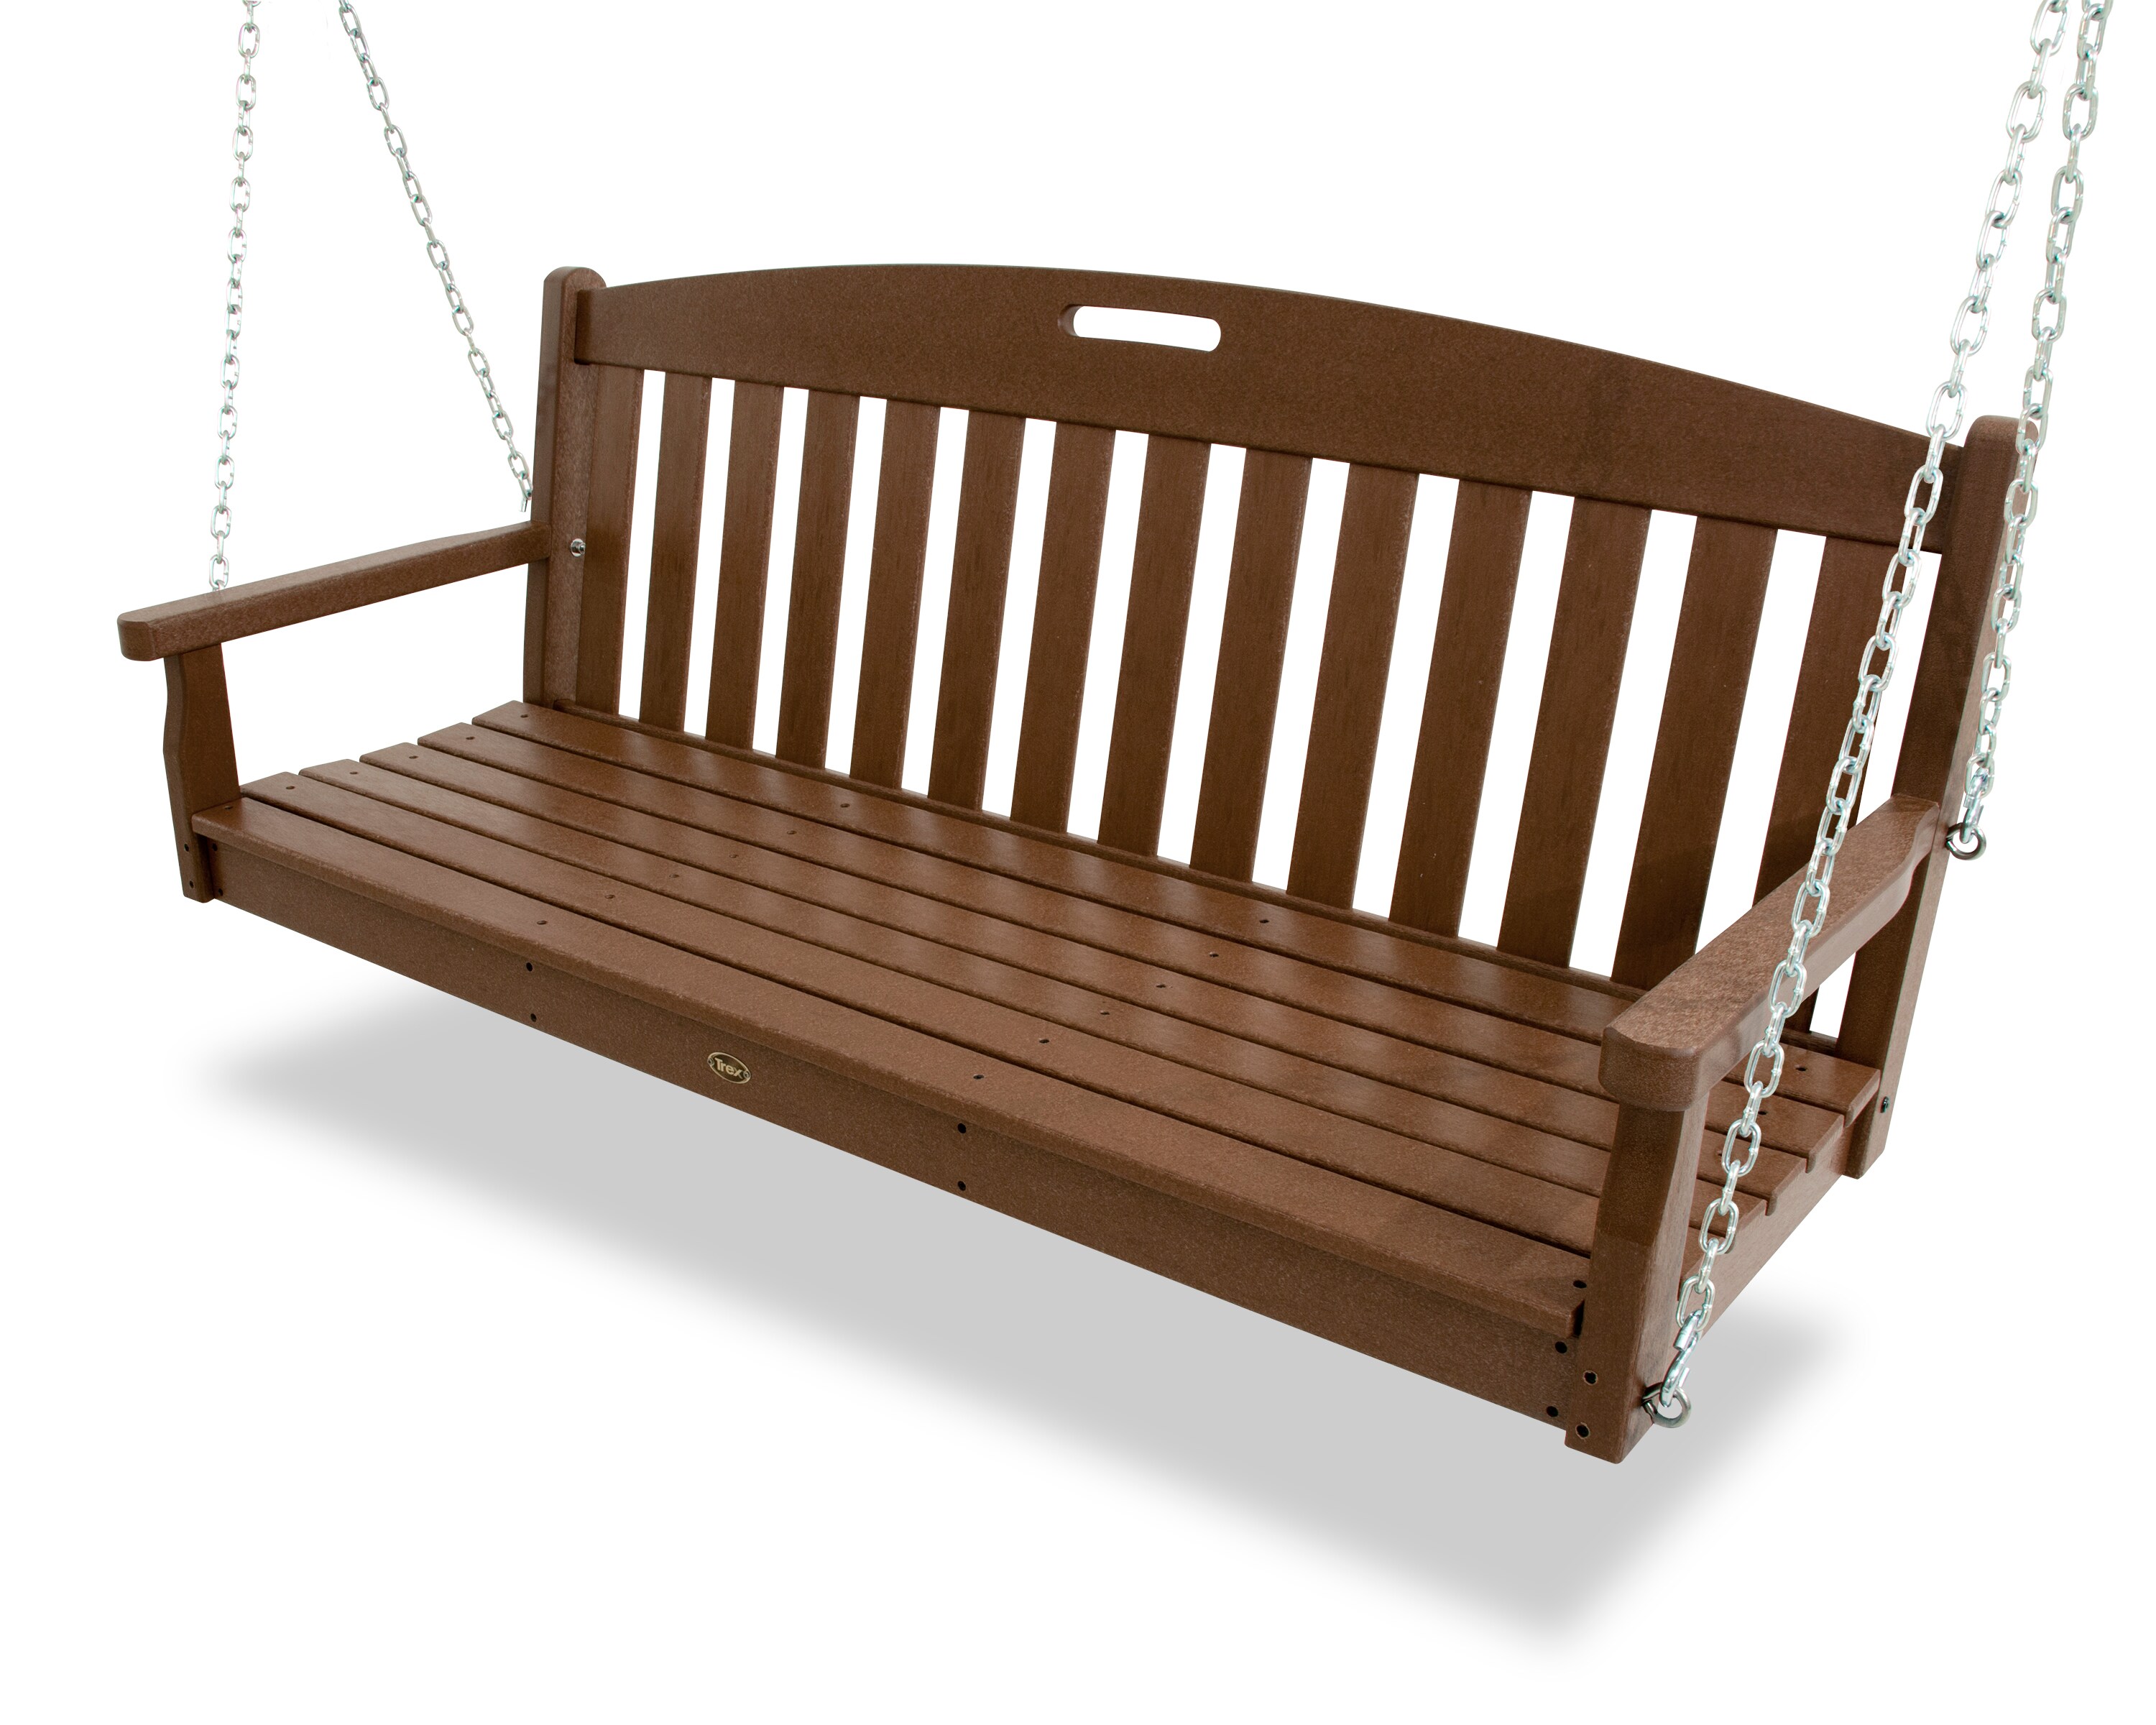 Brown Slat Back Hanging Porch Swing Outdoor Seating Furniture Garden Deck 